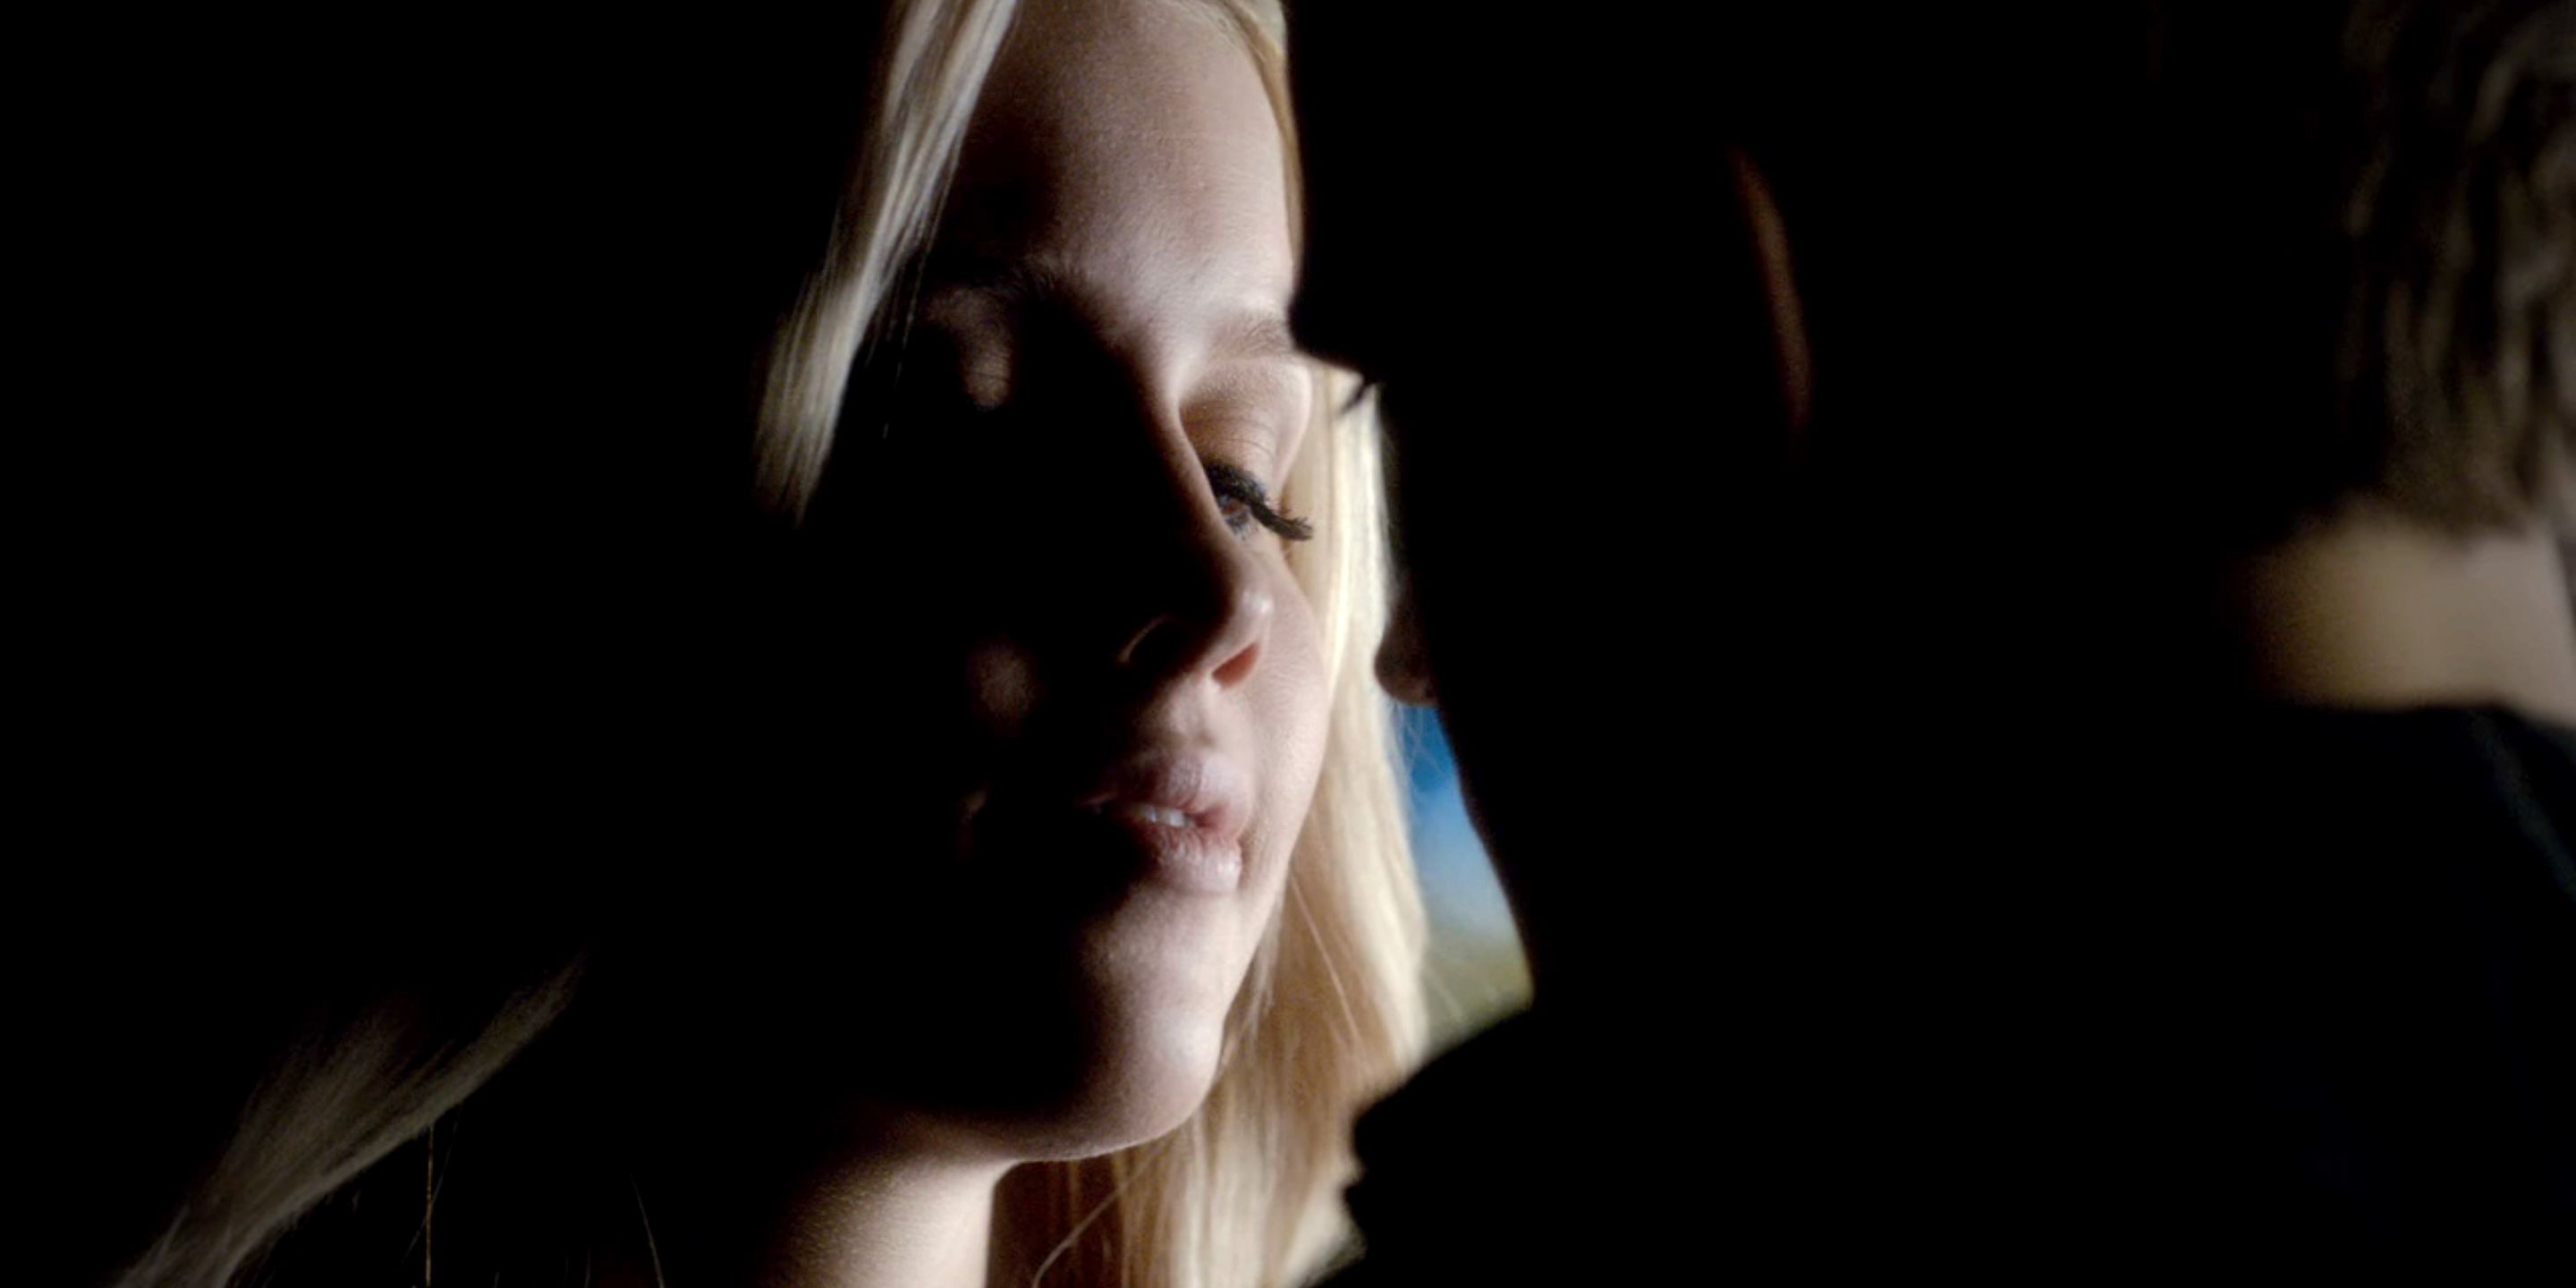 Rebekah and Stefan almost kiss in The Vampire Diaries.